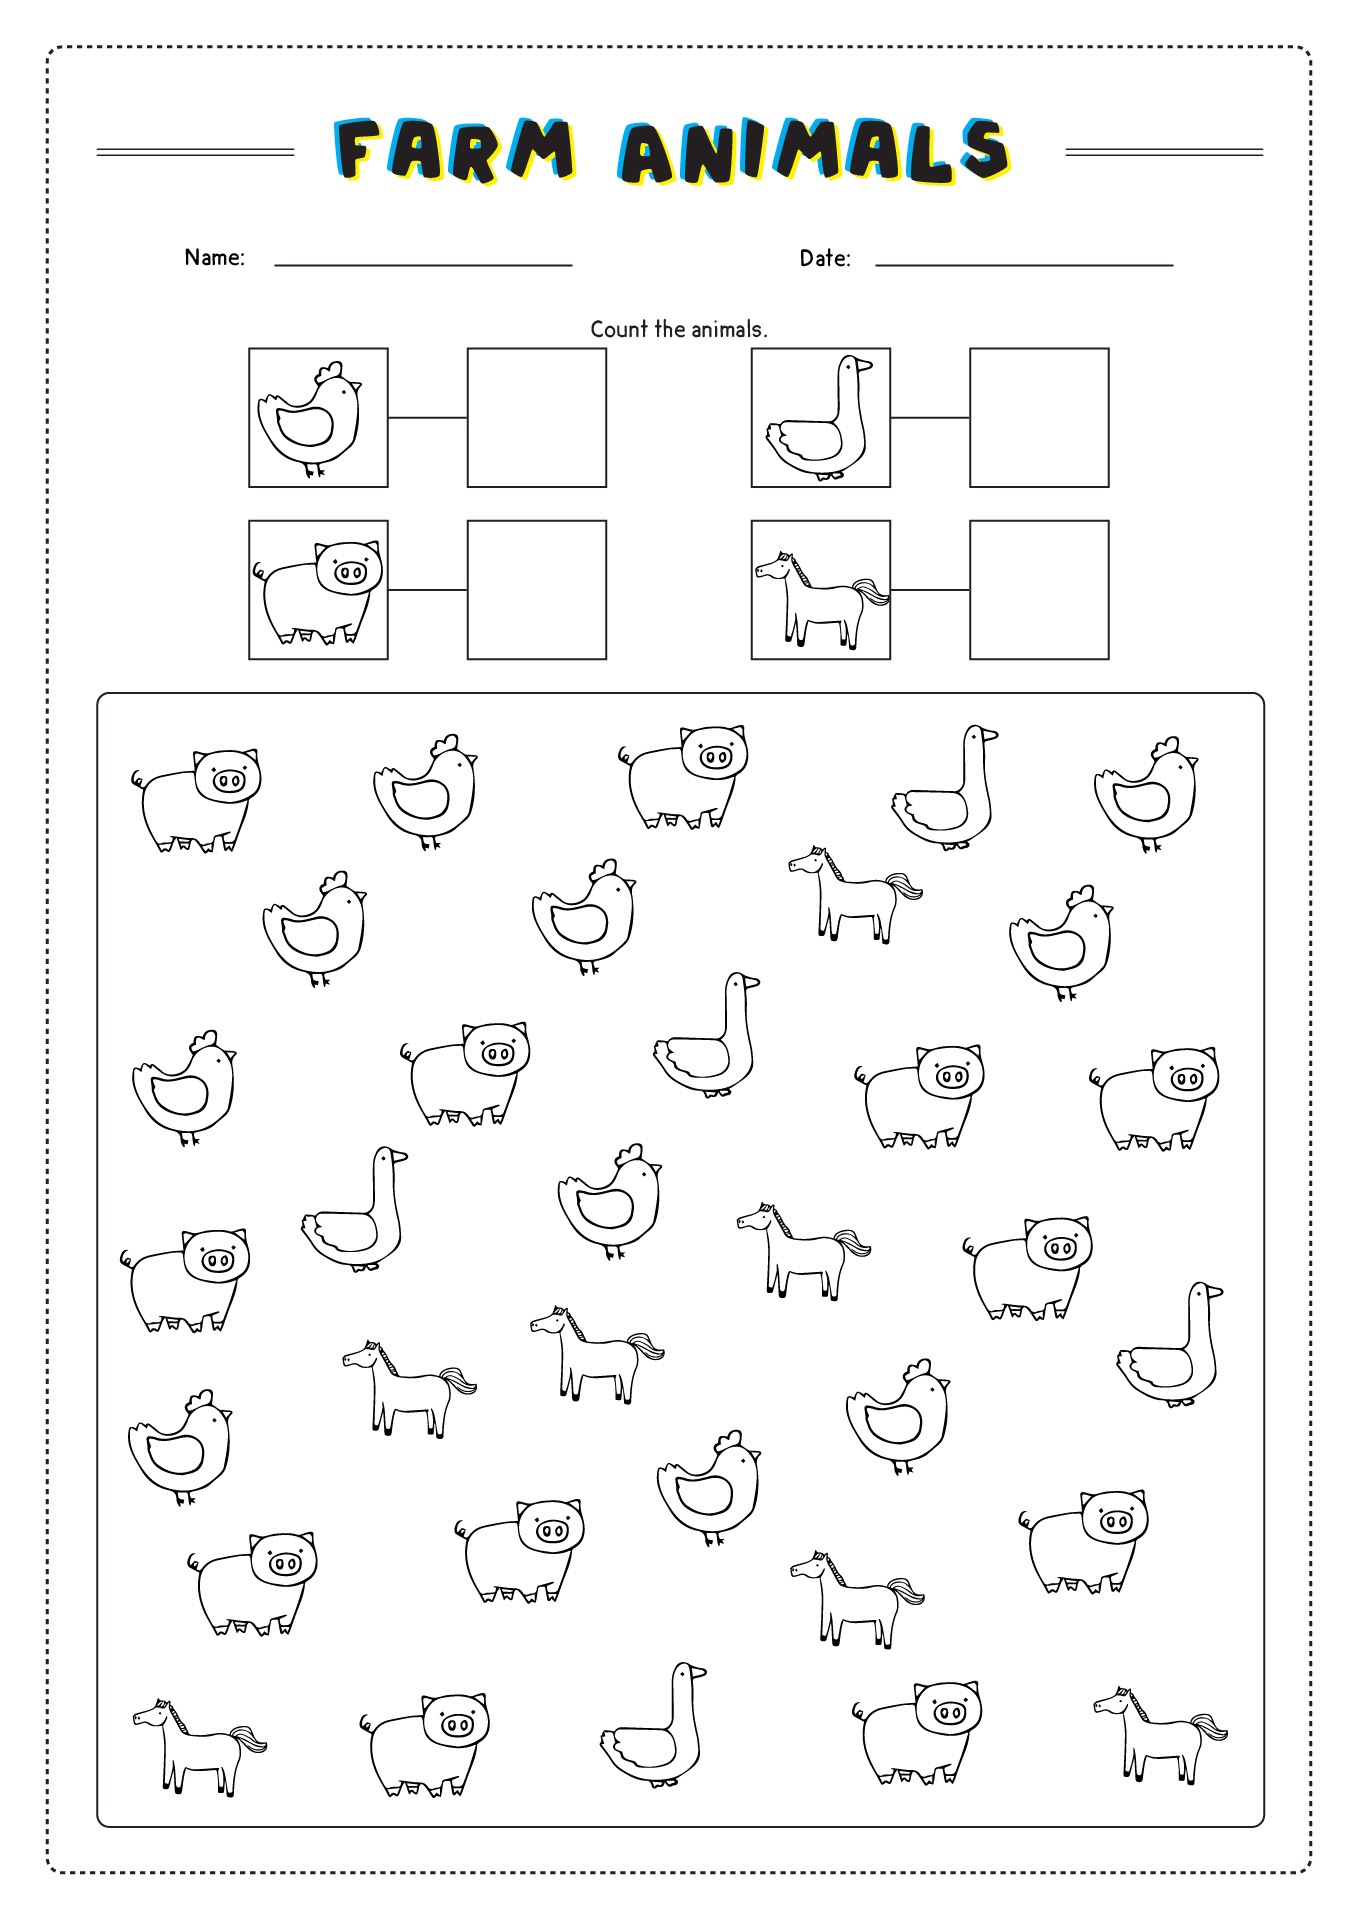 Farm animals Worksheets. Domestic animals Worksheets. Farm animals Worksheets for Kids. Describing animals Worksheets. Farm animals worksheet